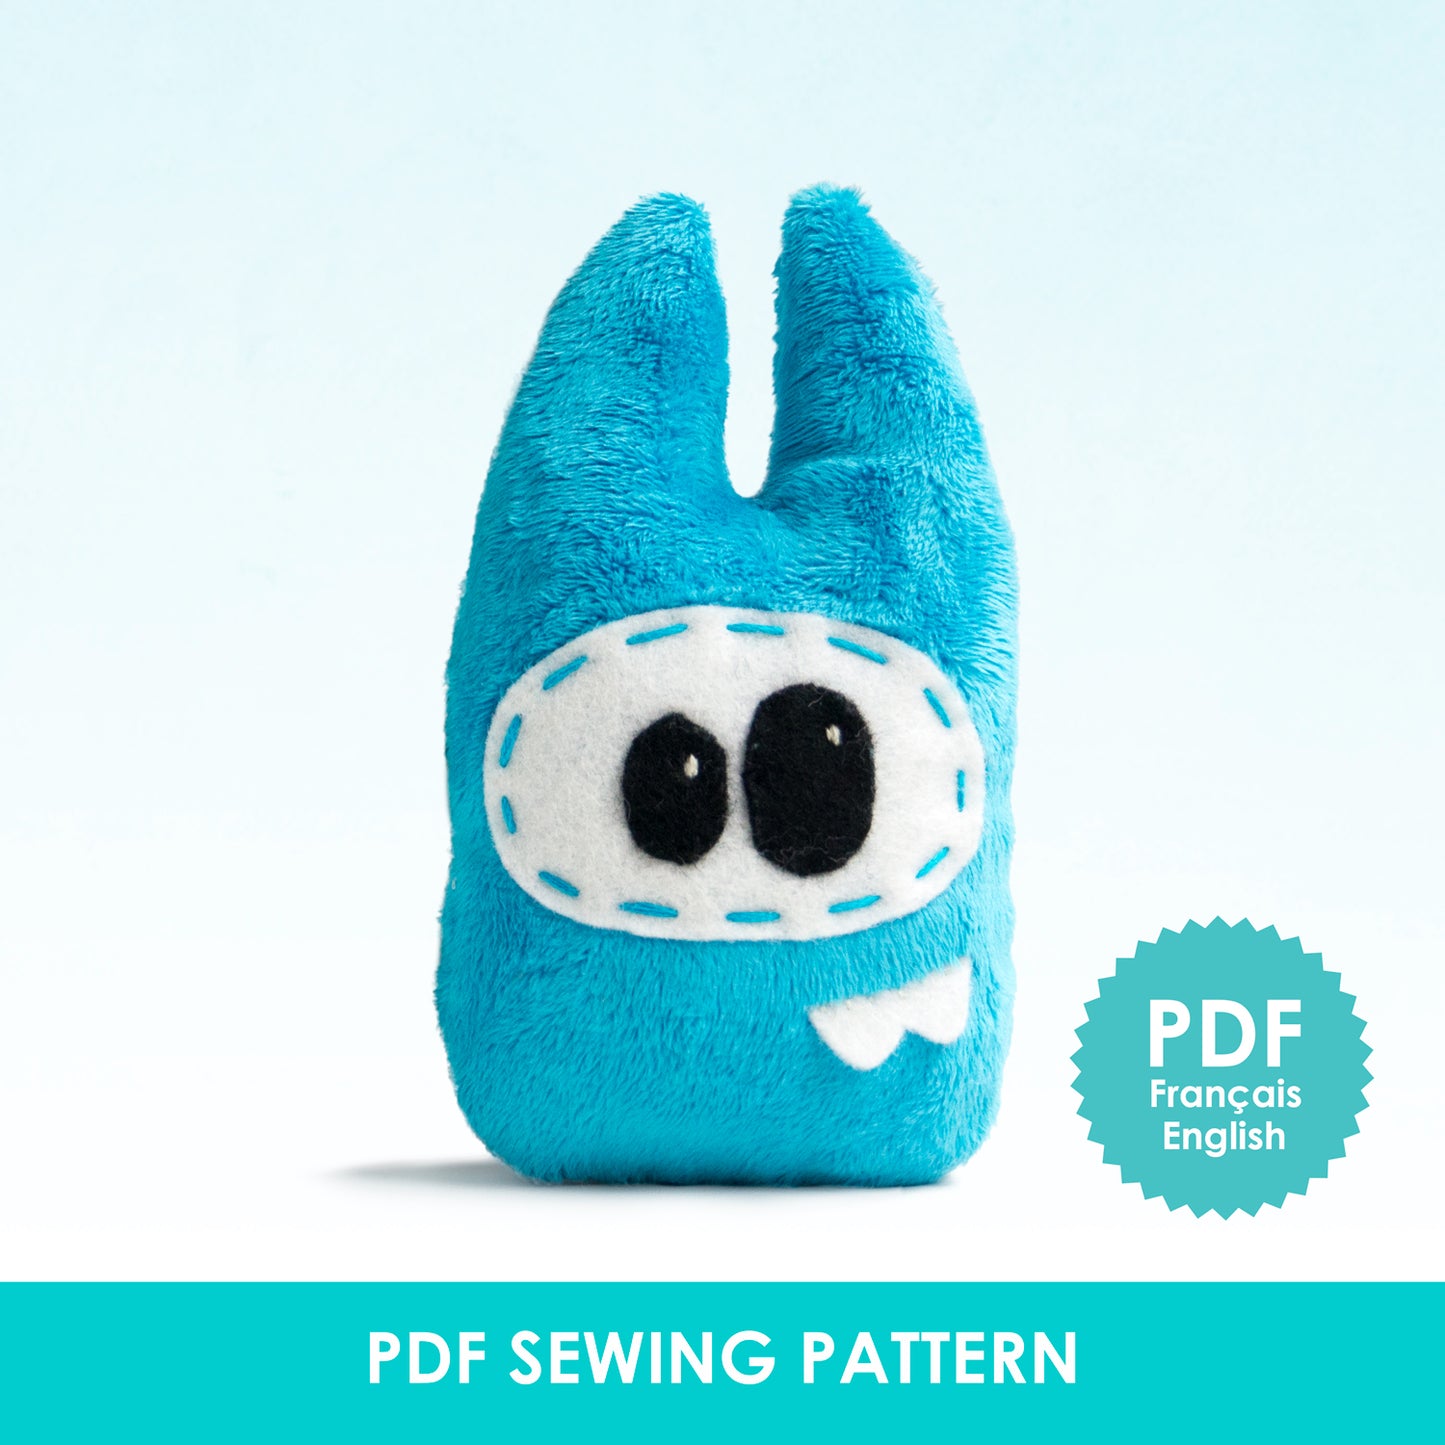 PDF Sewing Pattern - Blue monster